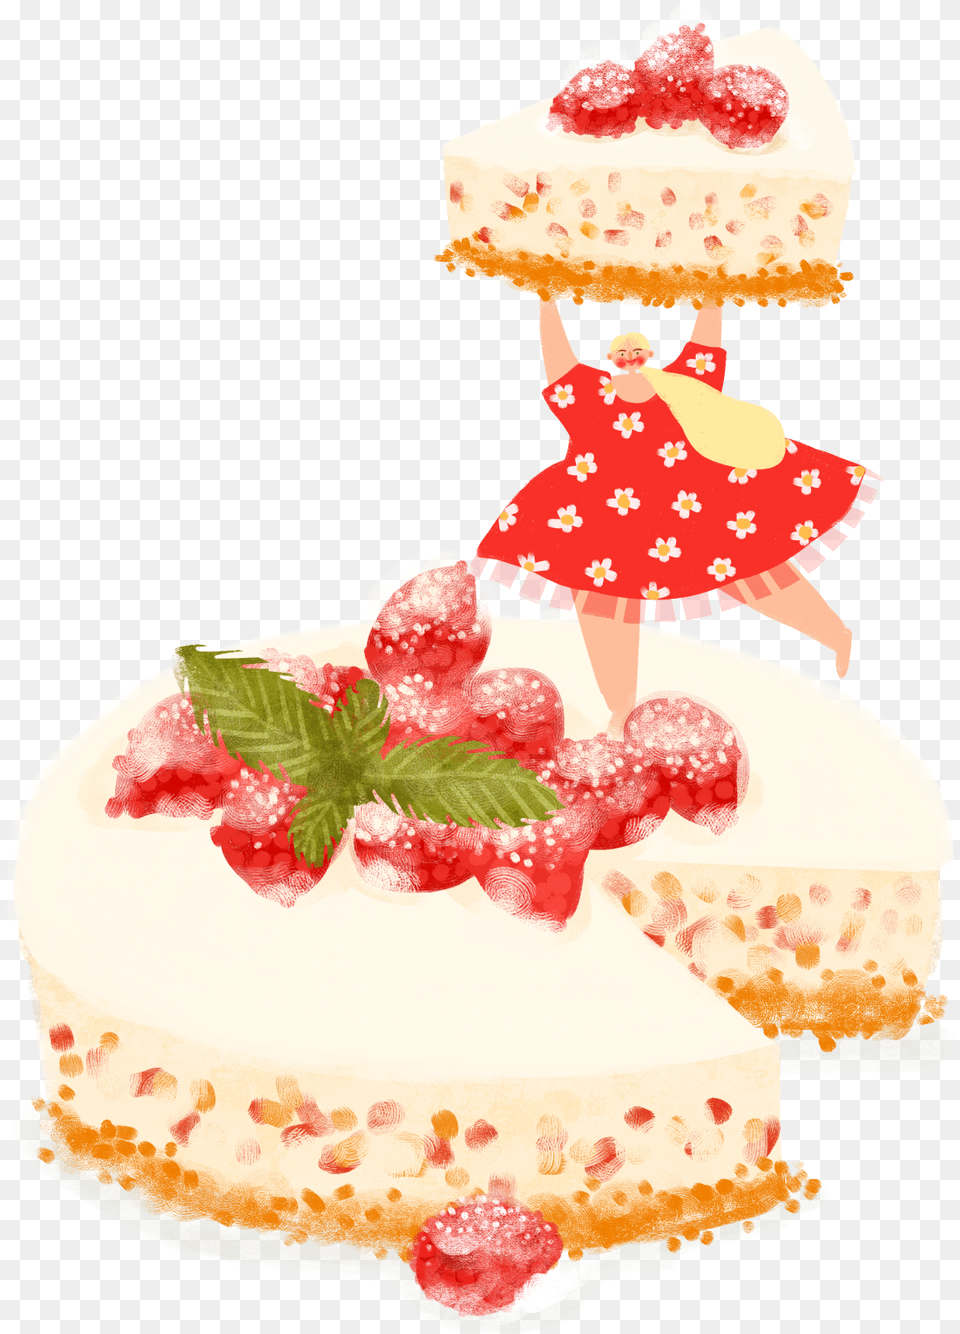 Food Illustration Dessert Pastries Cheesecake, Torte, Cake, Birthday Cake, Cream Free Png Download